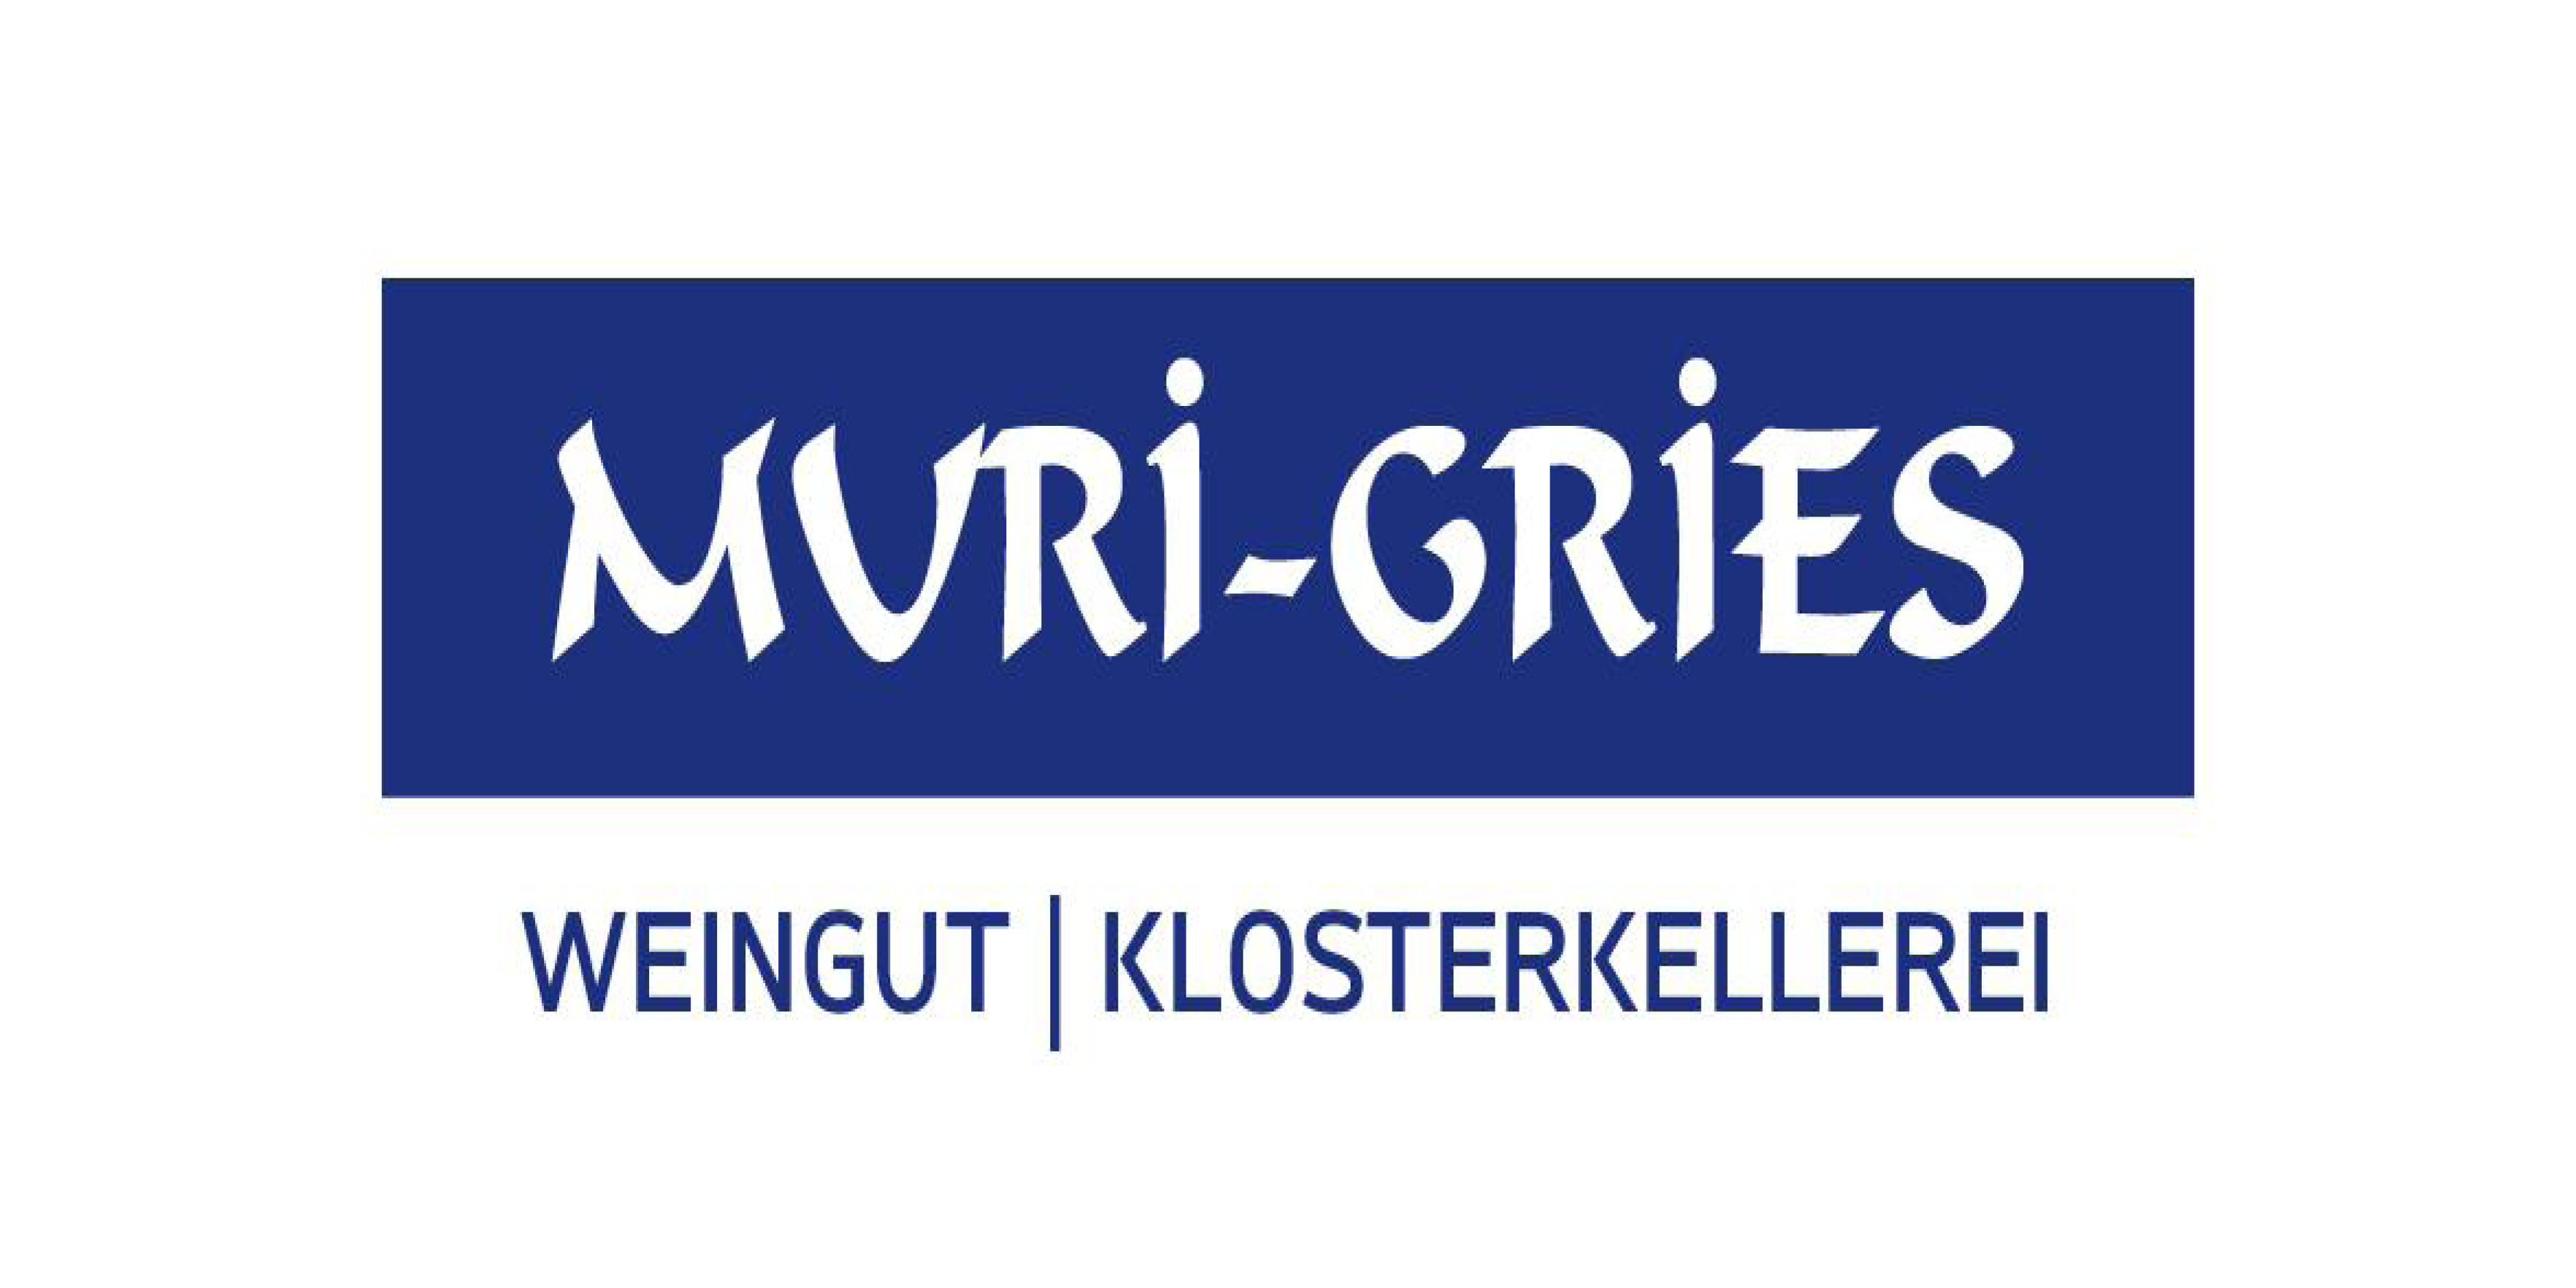 Klosterkellerei Muri-Gries des Szukics Stefan & Co. KG